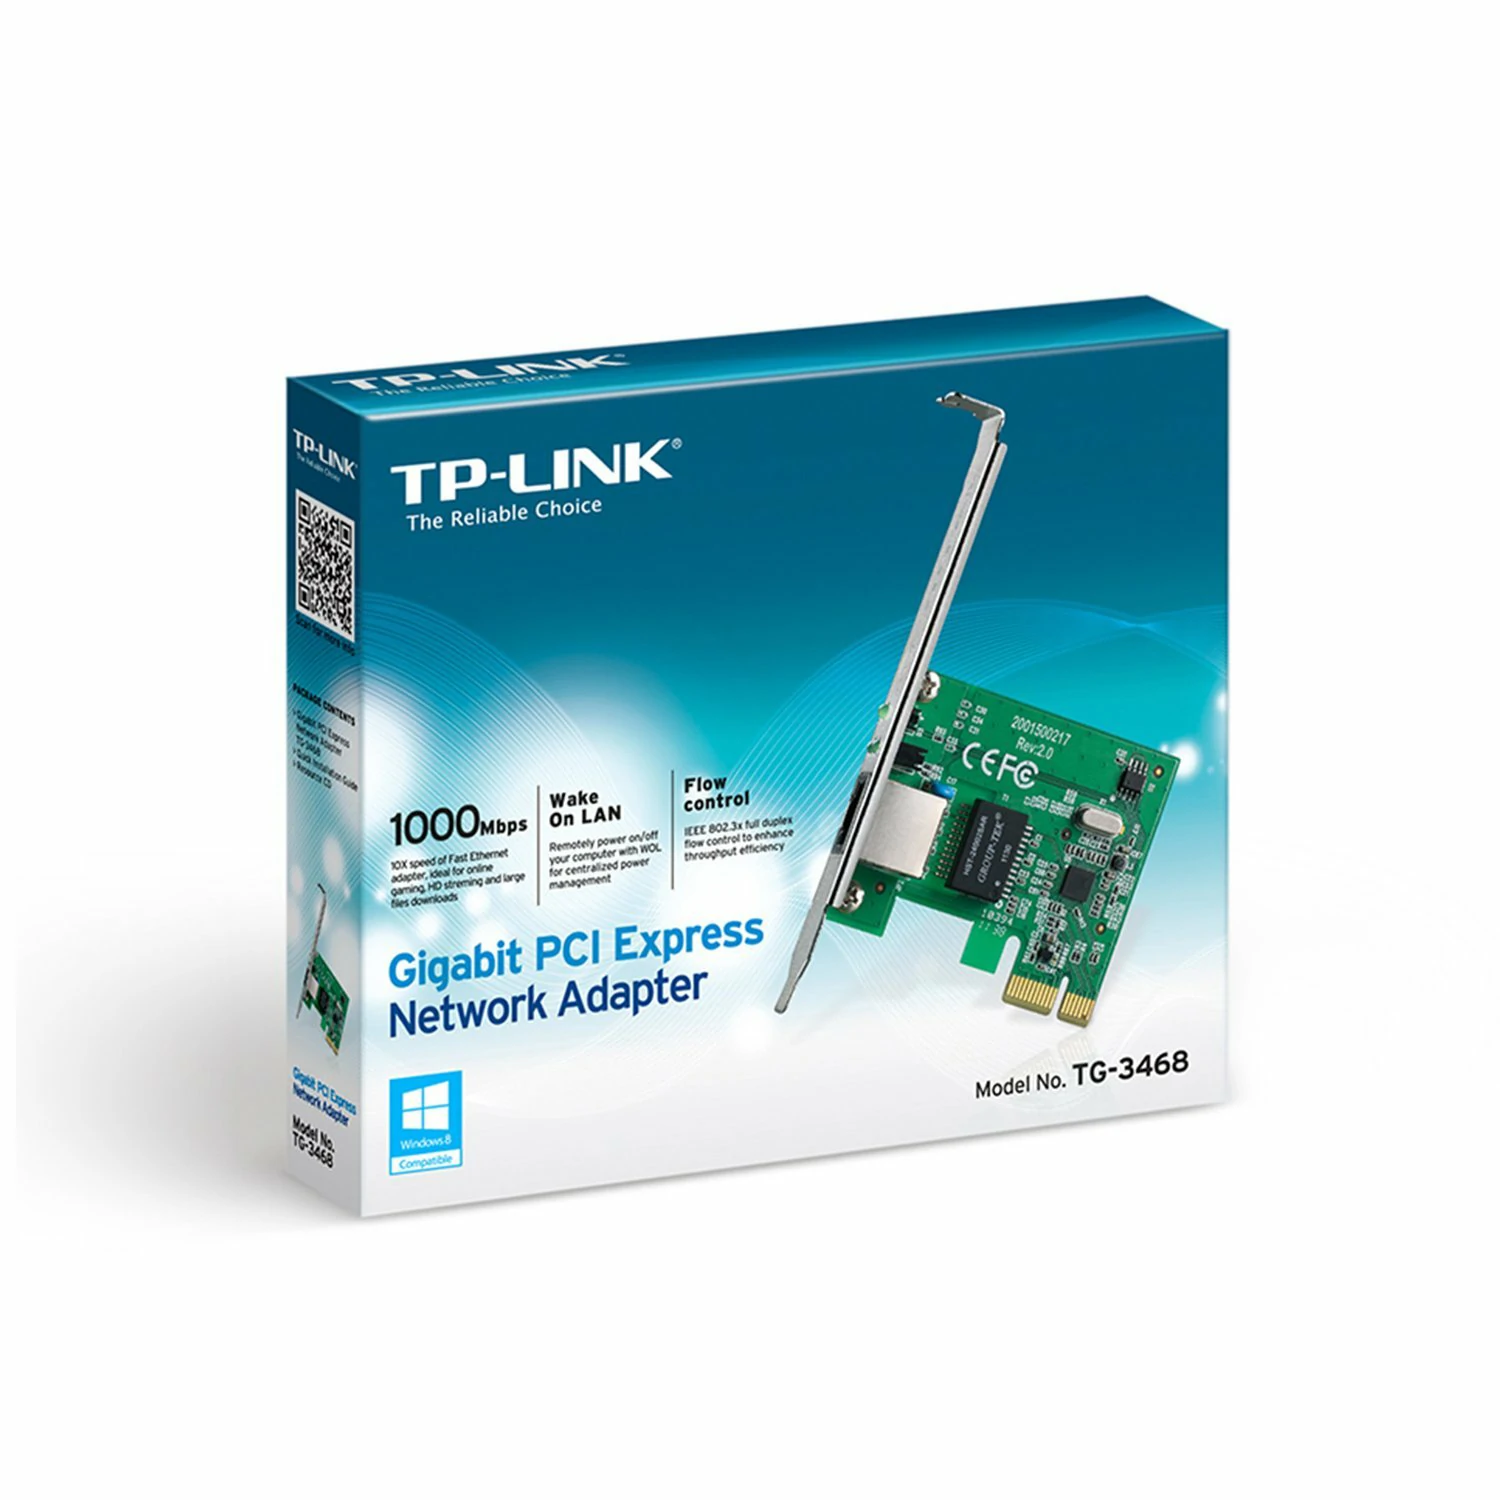 TG-3468 Gigabit PCI Express Network Adapter 3